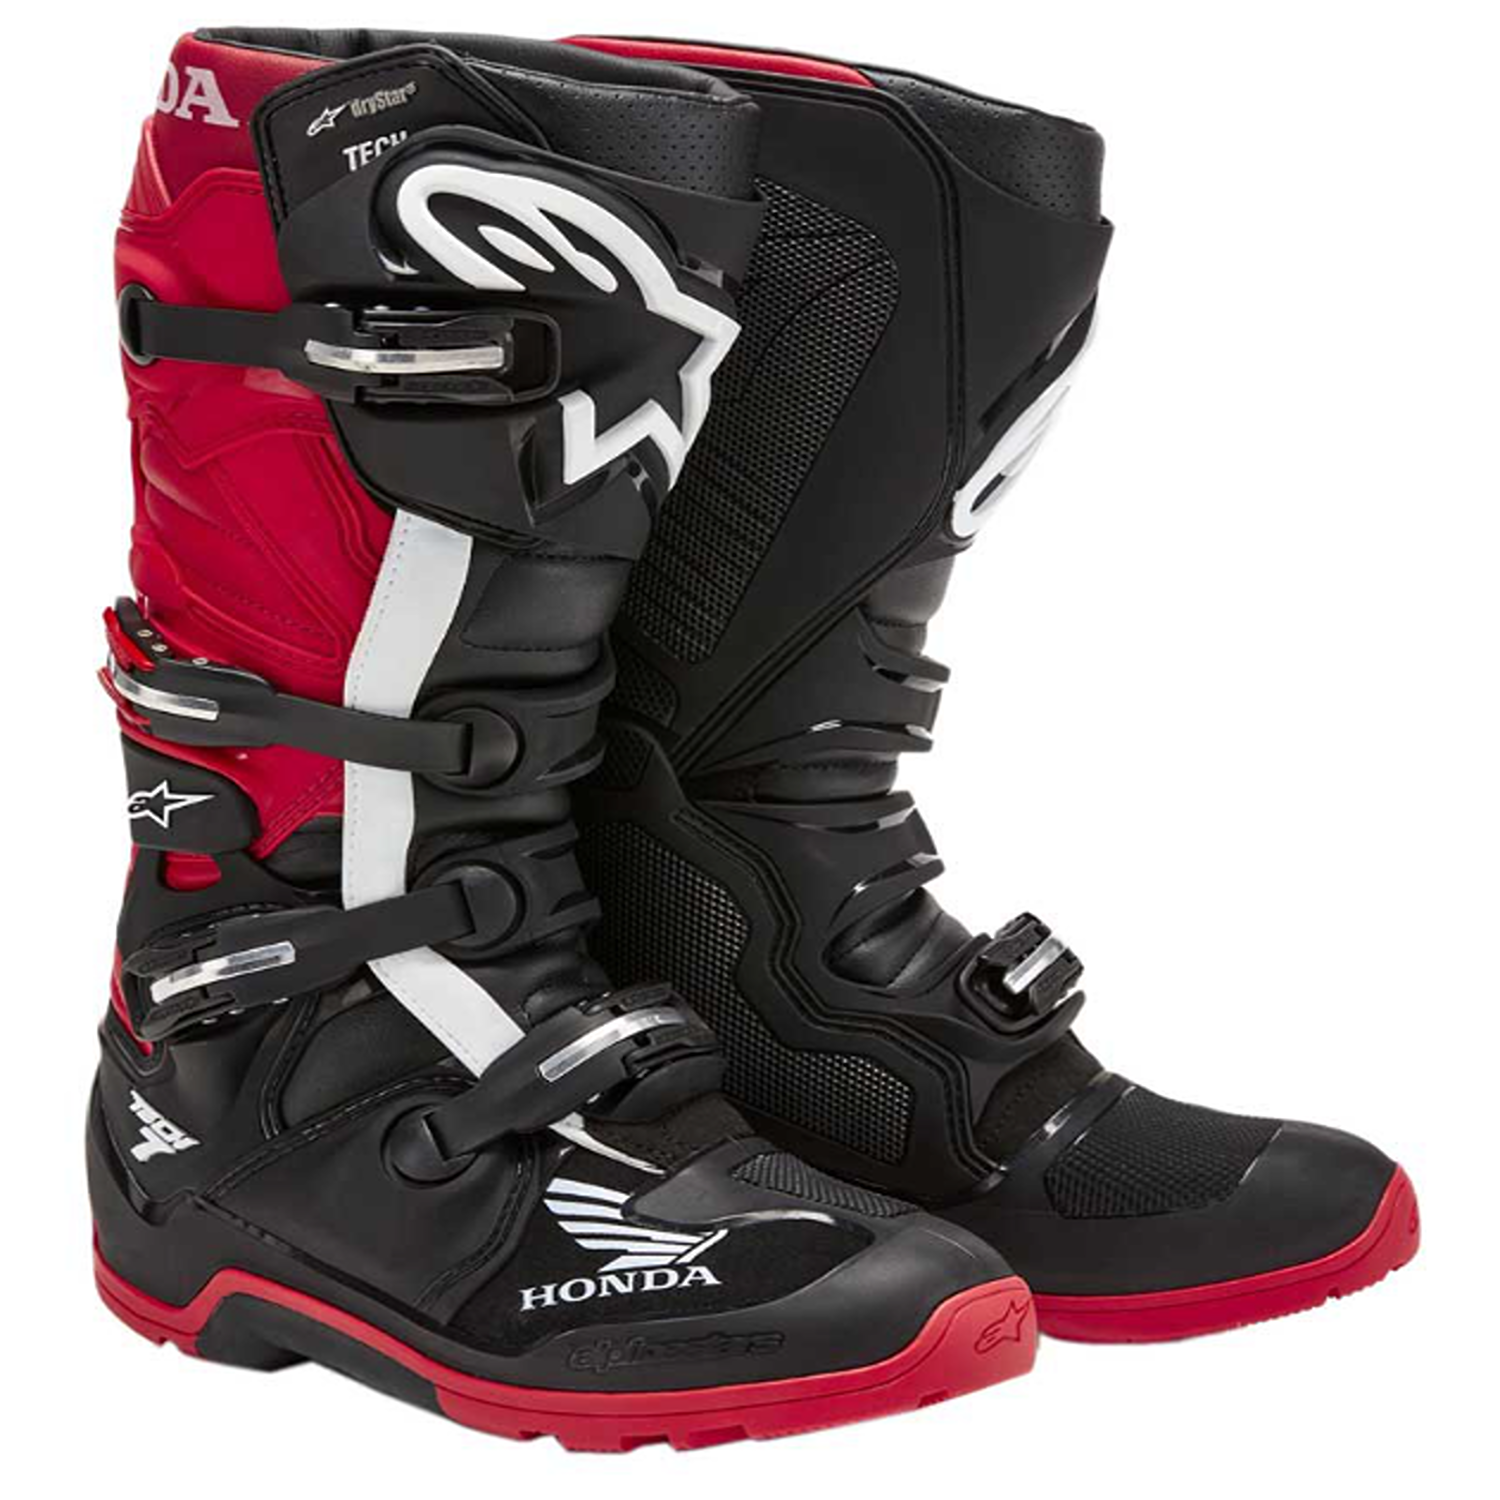 Image of Alpinestars Honda Tech 7 Enduro Drystar Boots Black Bright Red Size US 7 ID 8059347155494